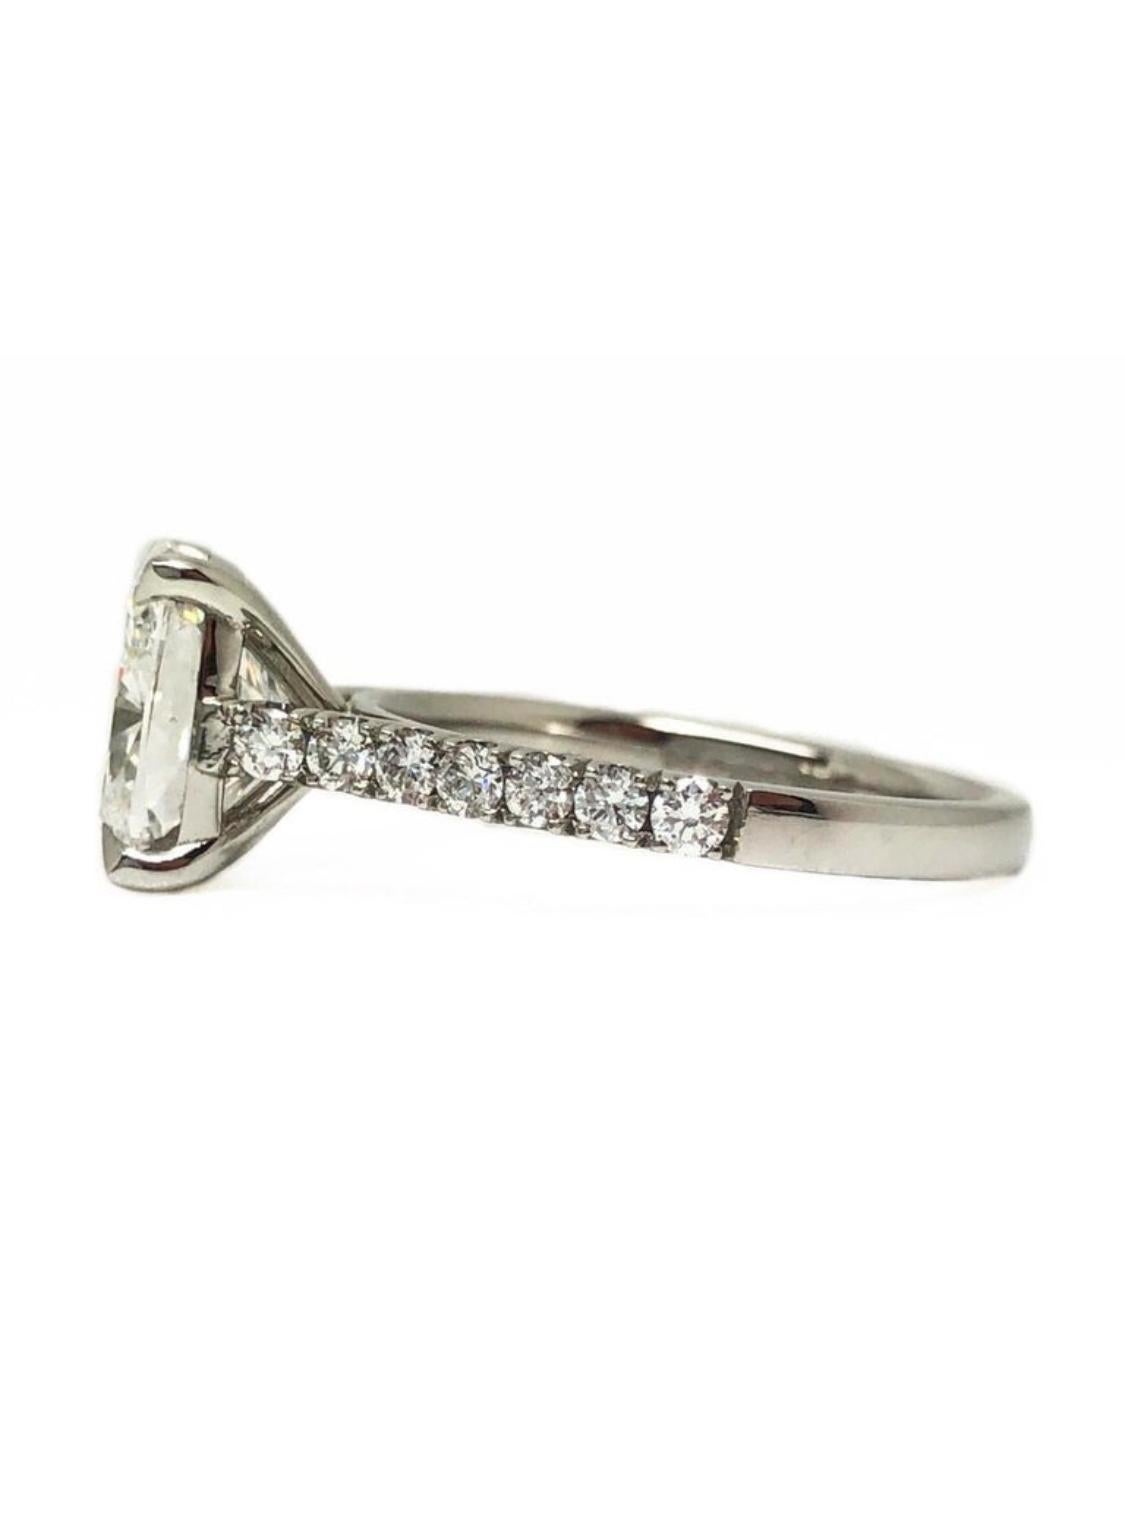 Women's 3 Carat GIA Certificate G Color Cushion Diamond Platinum Bespoke Engagement Ring For Sale